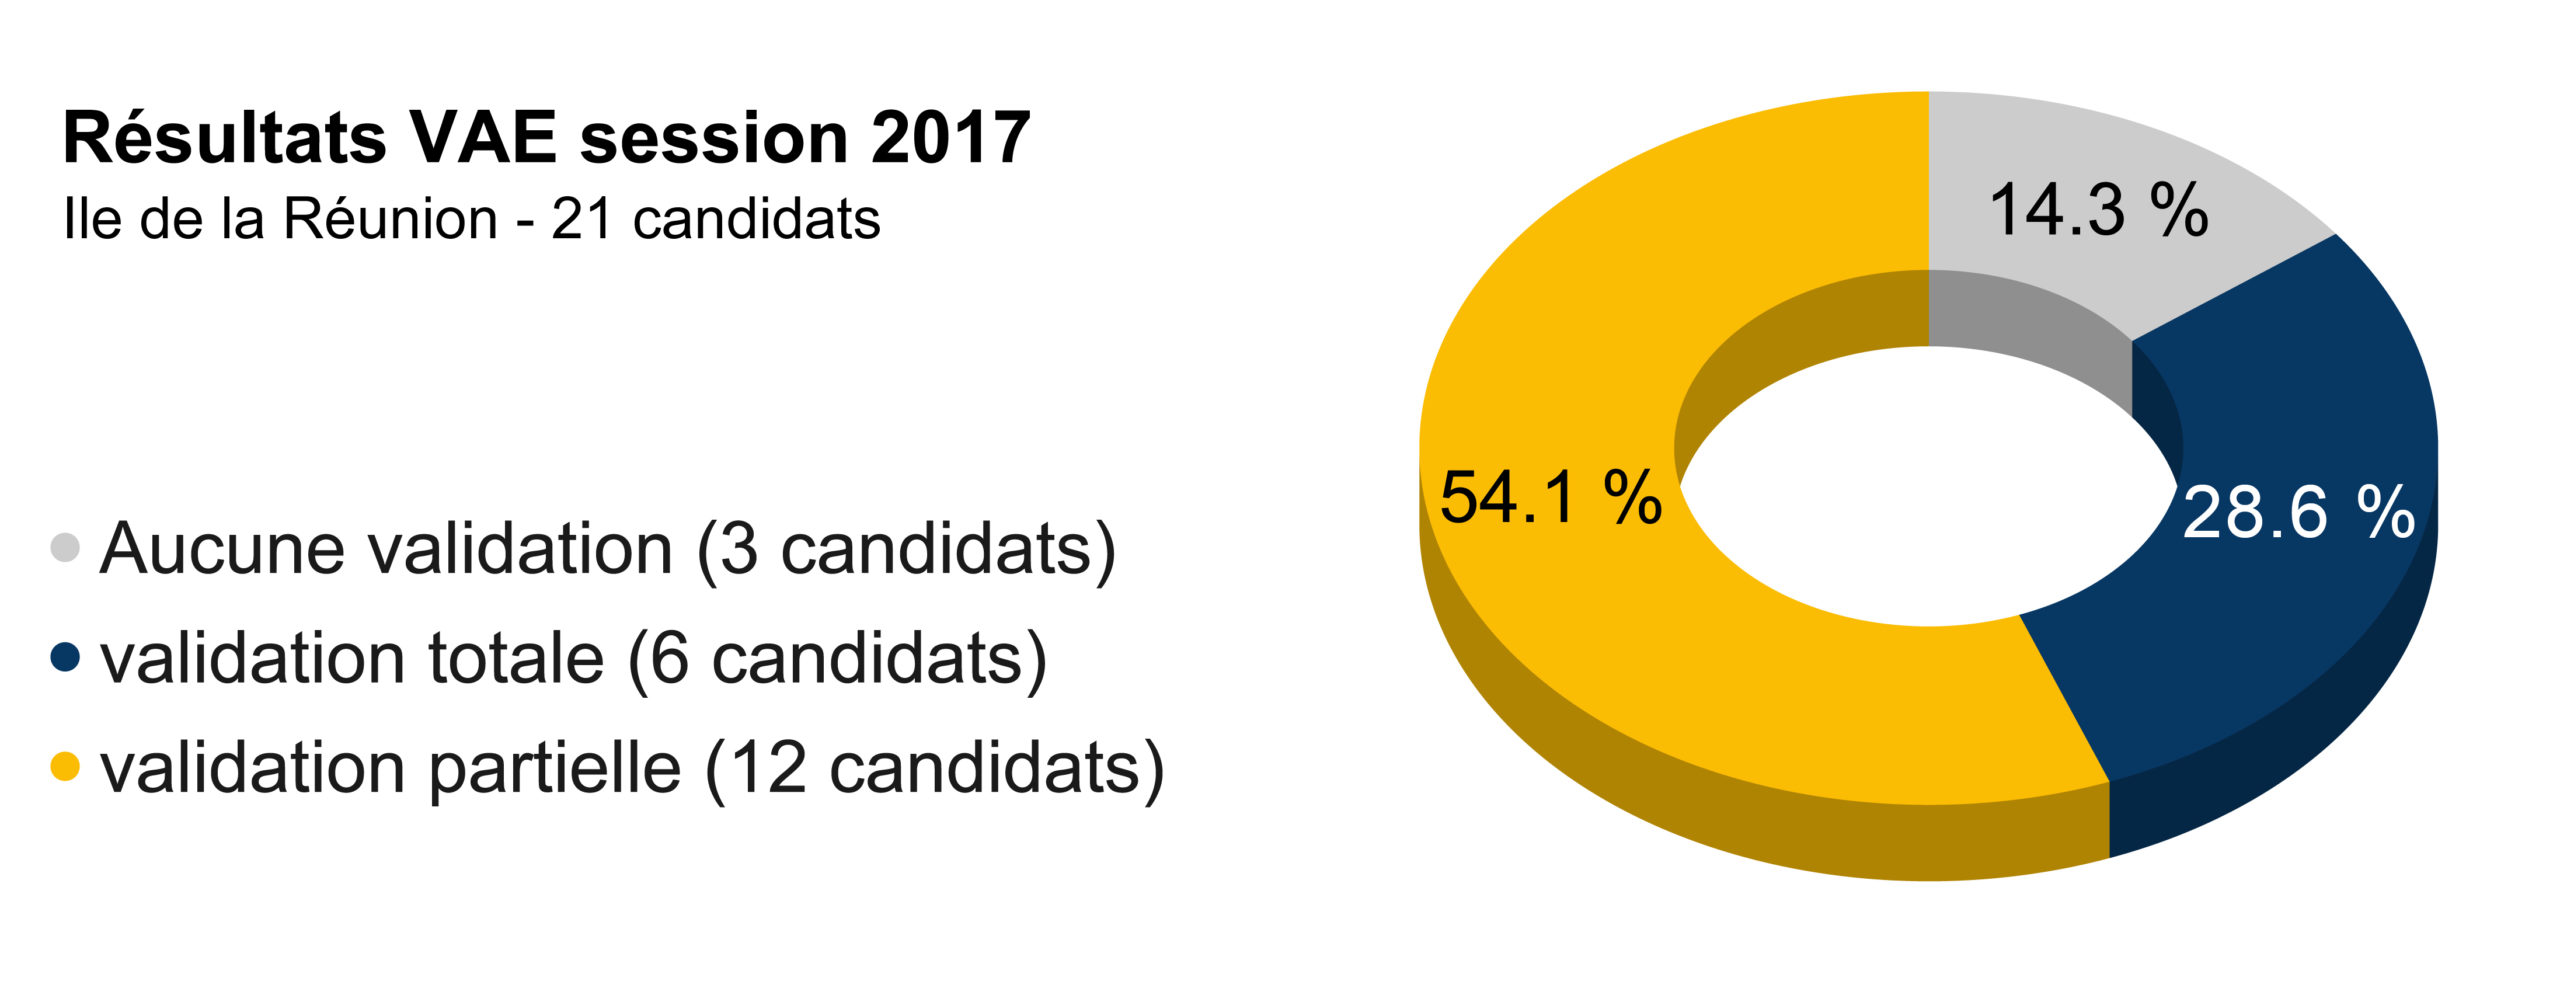 Resultats VAE session 2017 ile de la reunion scaled